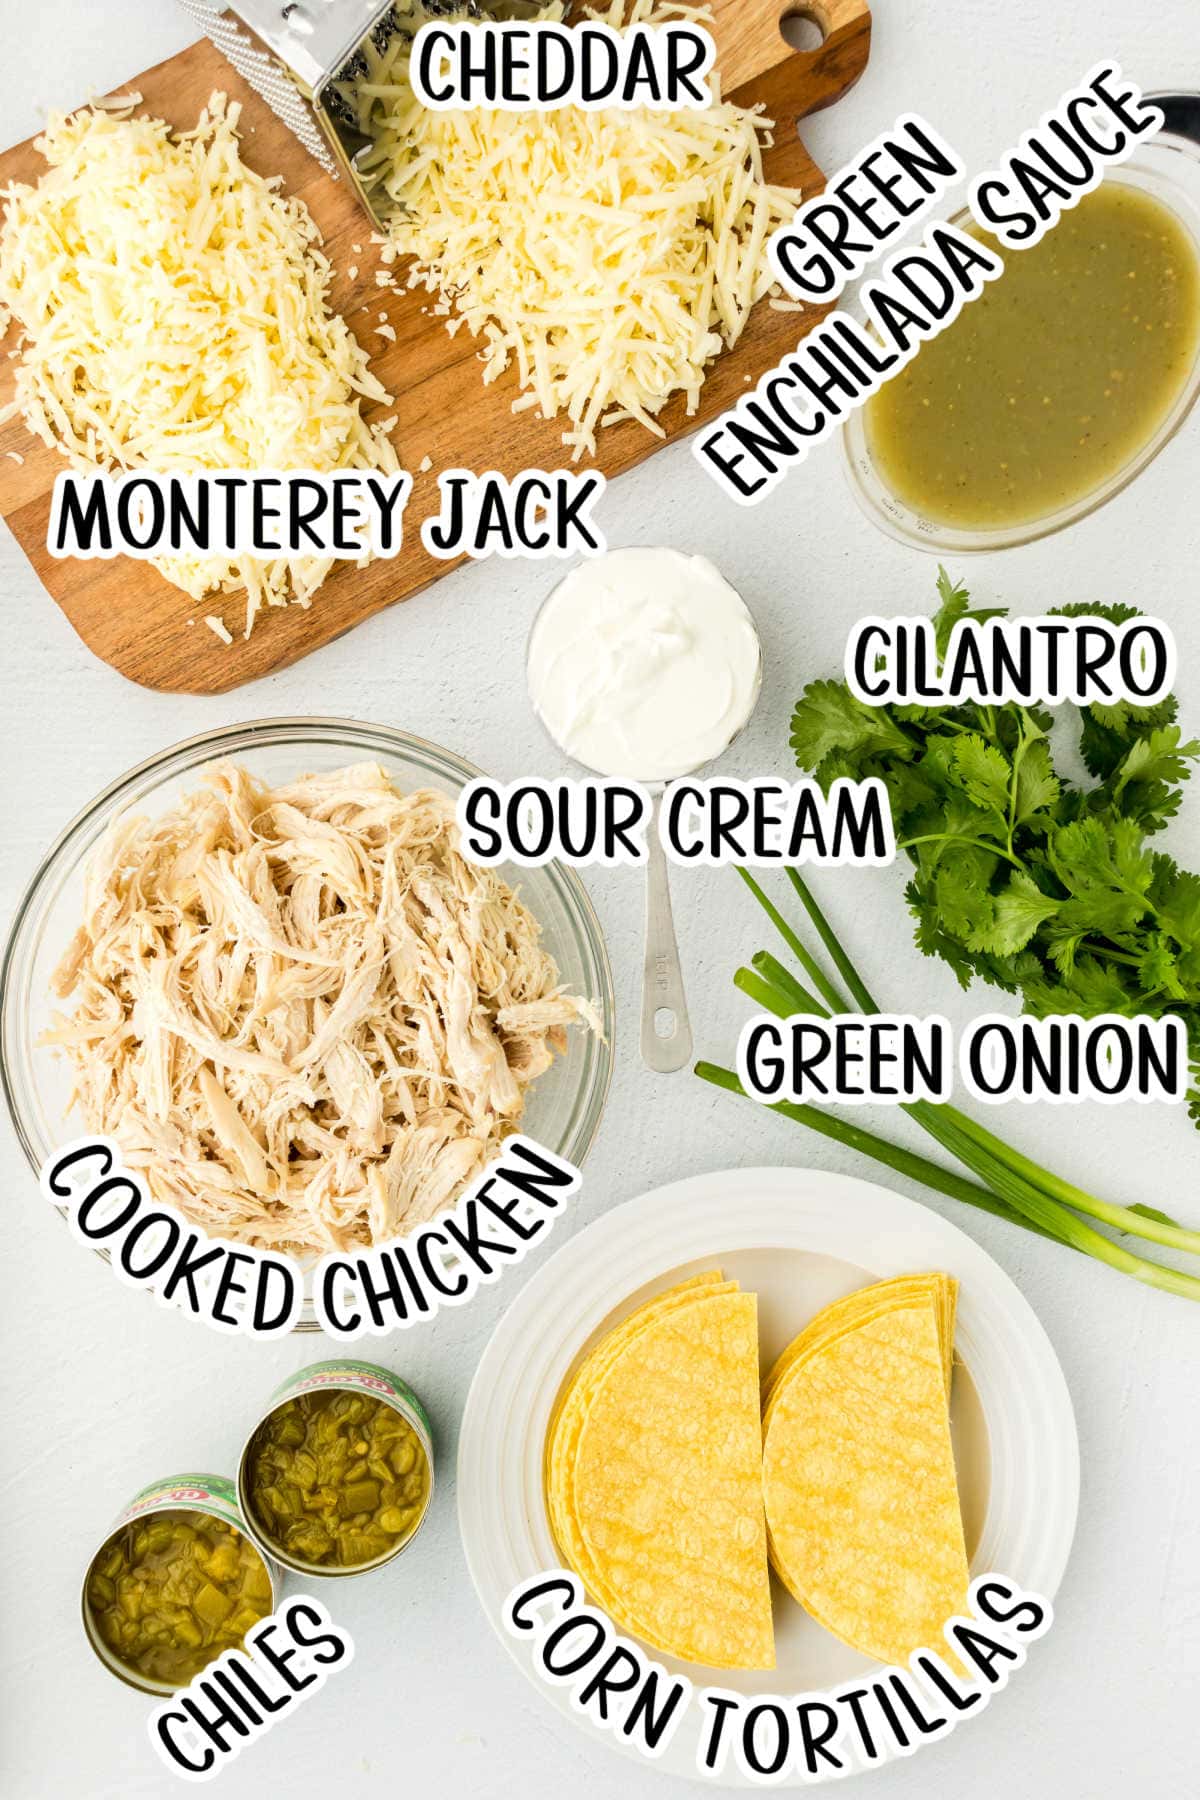 Labeled ingredients for sour cream chicken enchilada casserole.